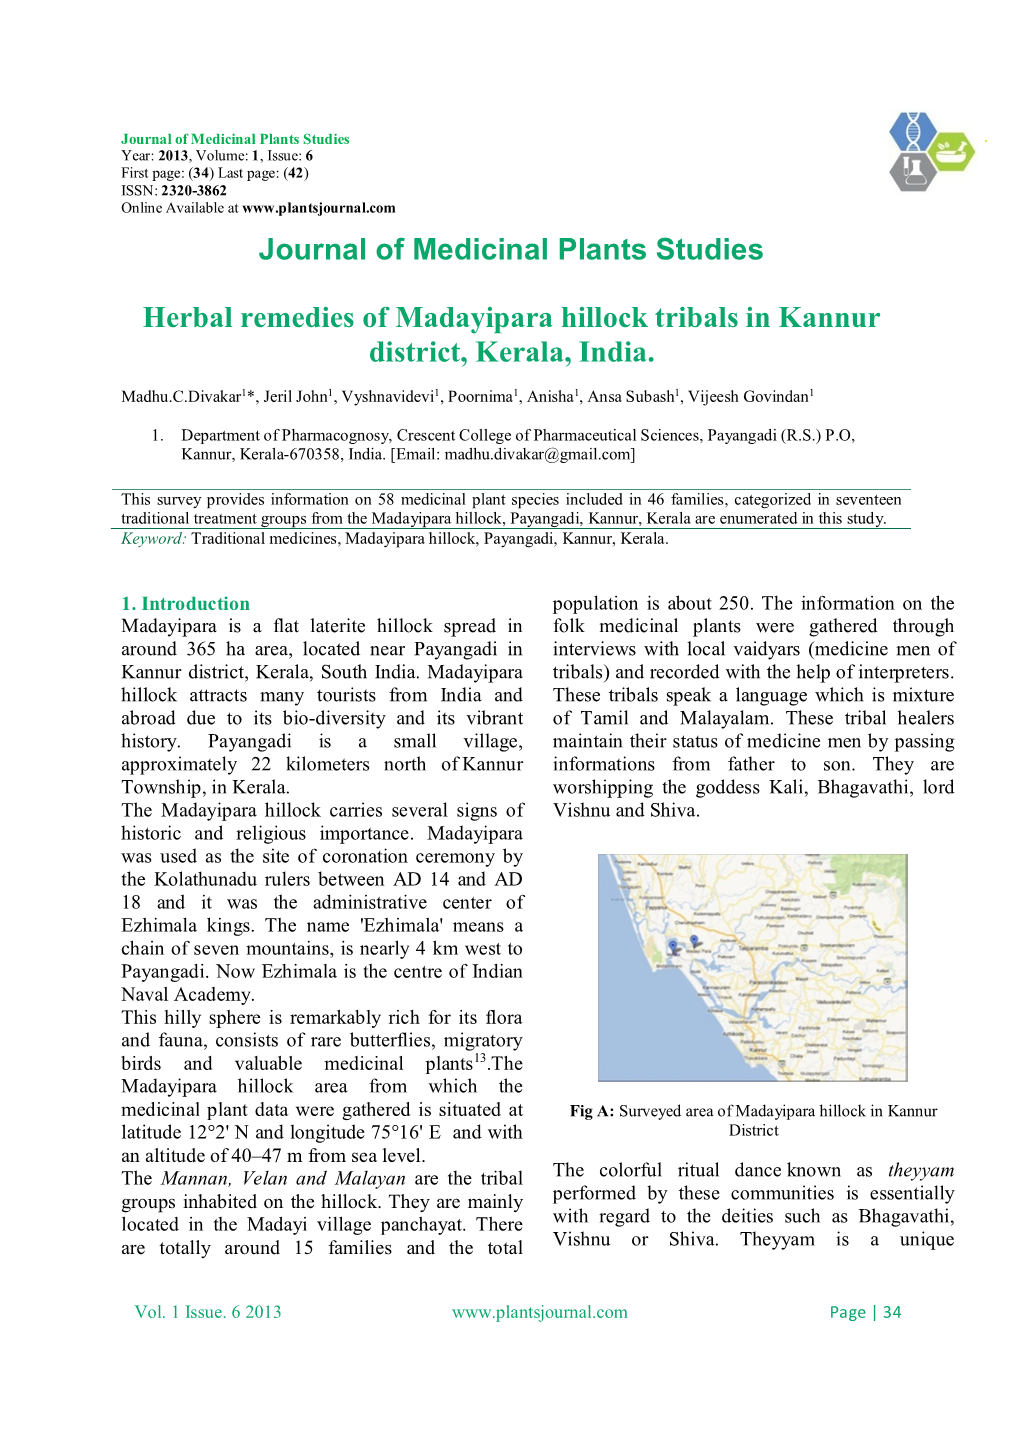 Journal of Medicinal Plants Studies Herbal Remedies of Madayipara Hillock Tribals in Kannur District, Kerala, India